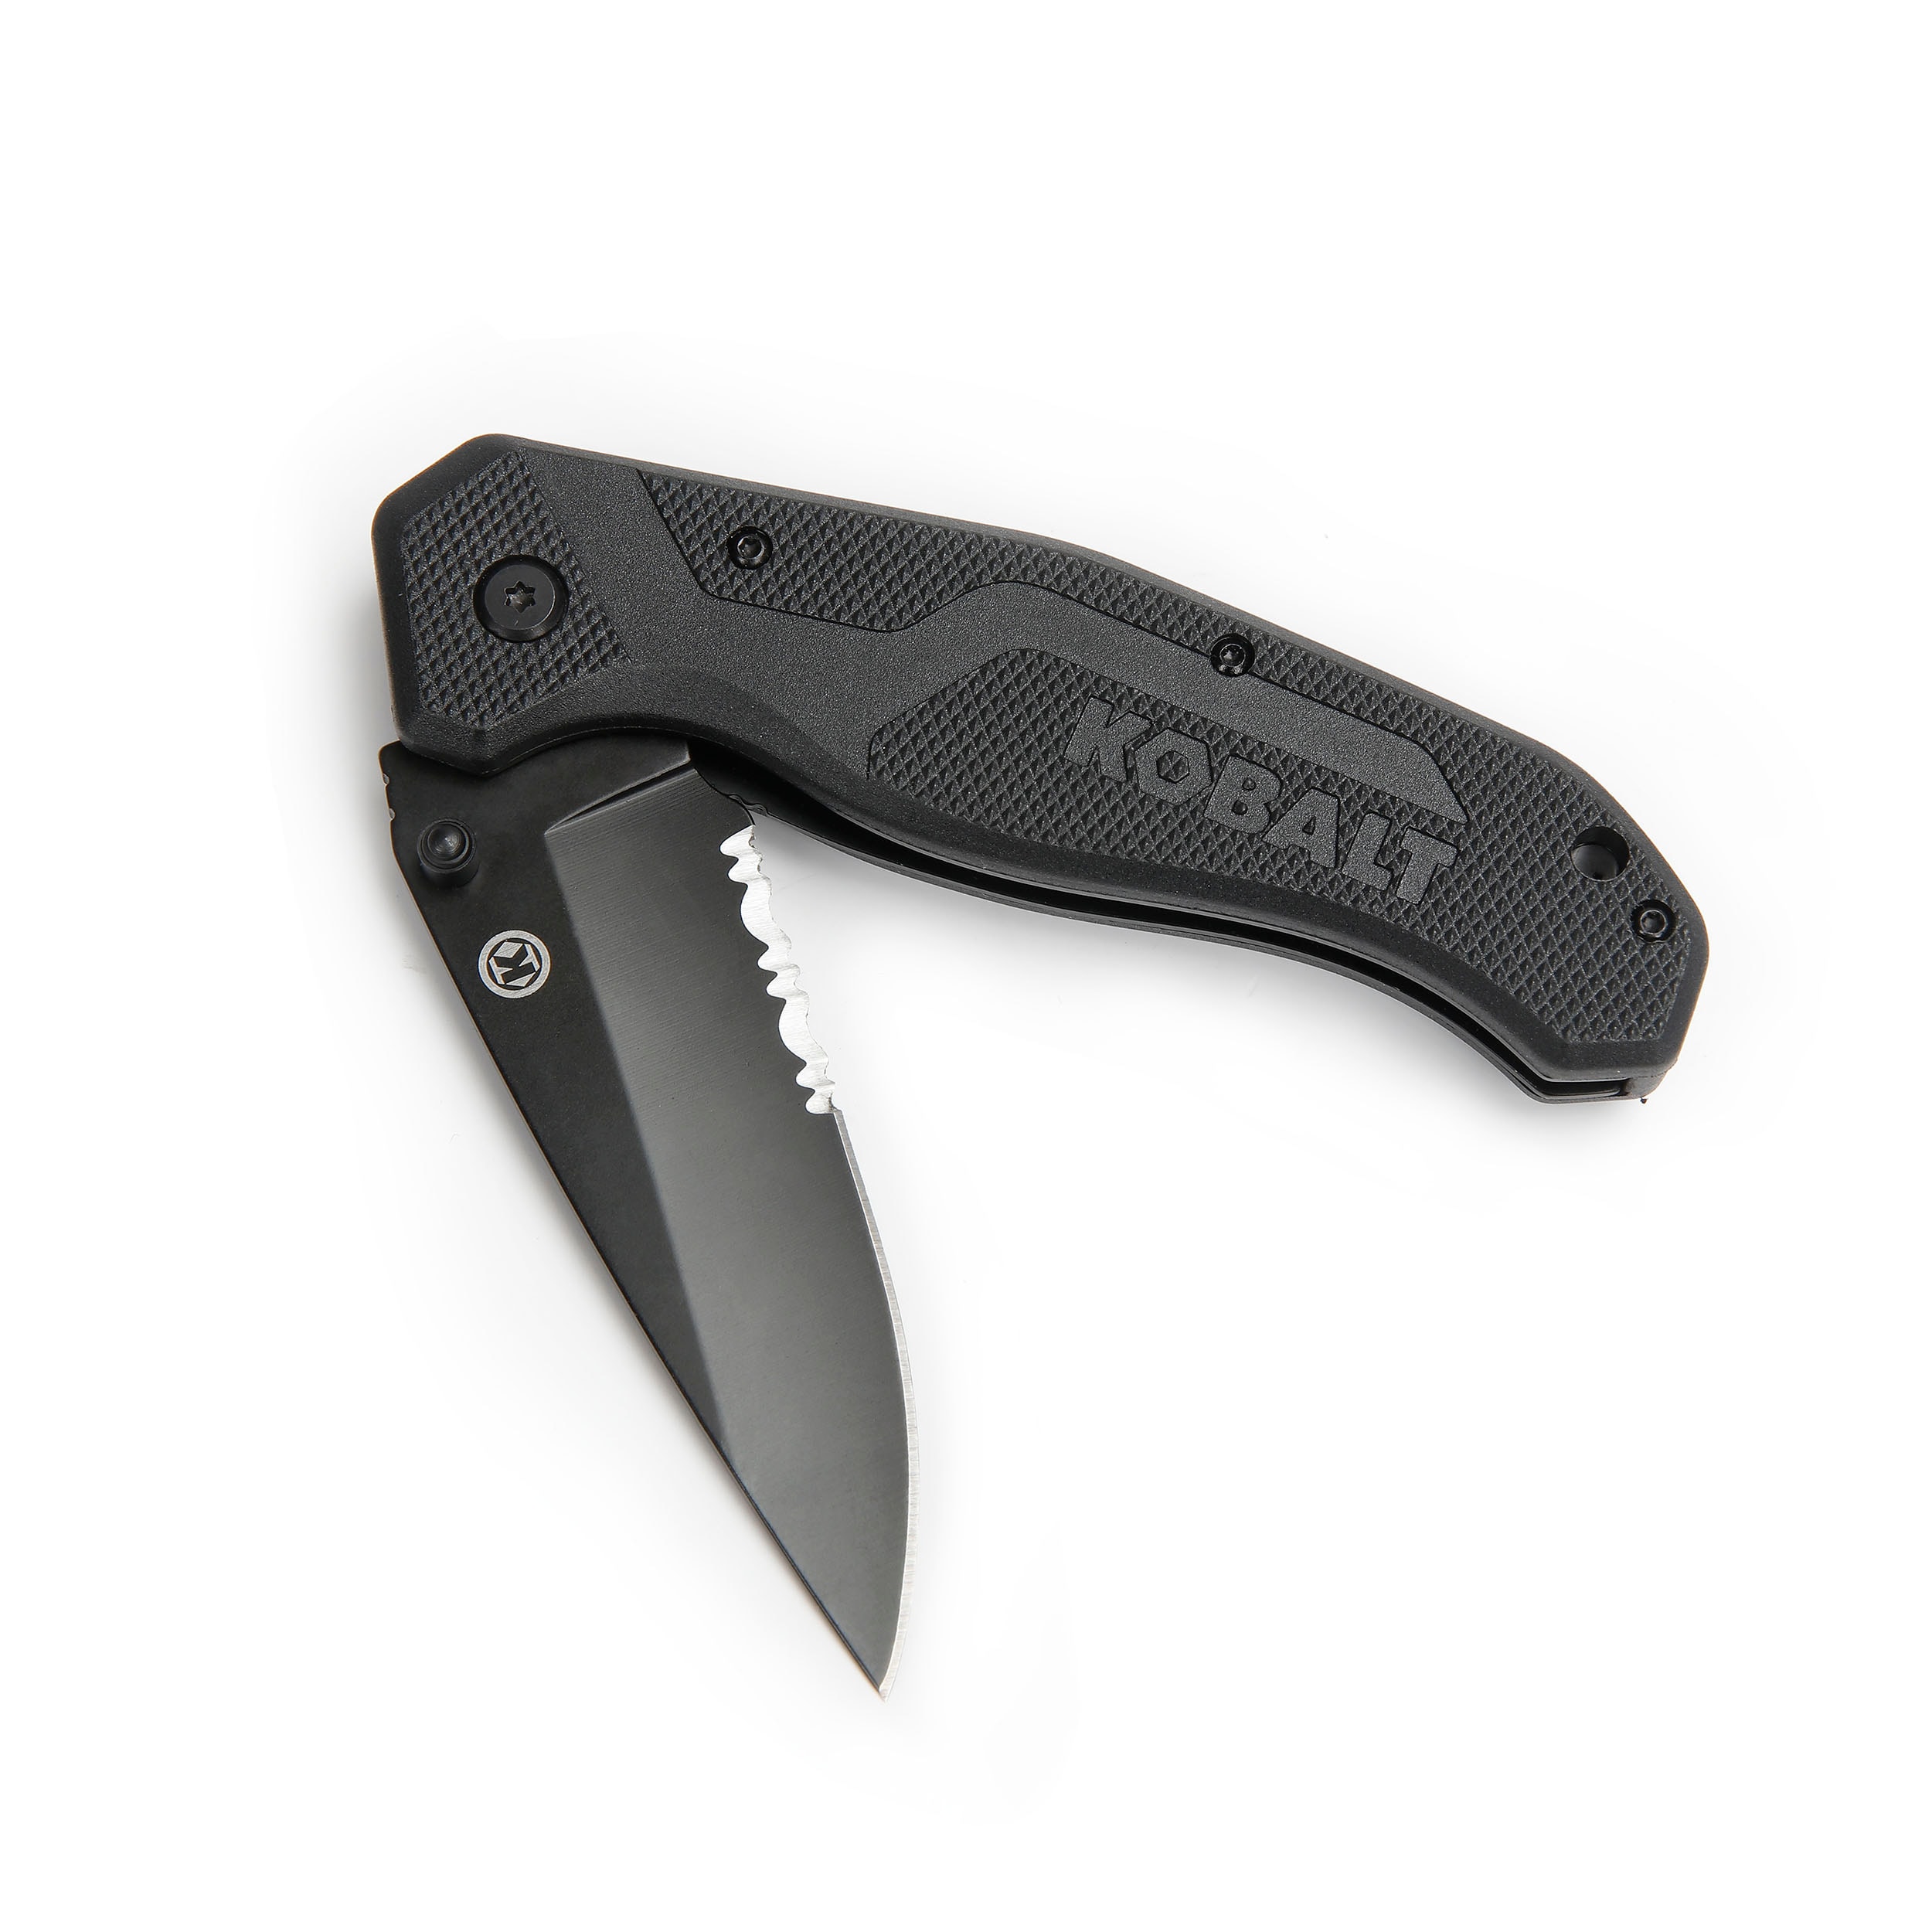 Kobalt 3.5-in Stainless Steel Blade with Serration Pocket Knife at